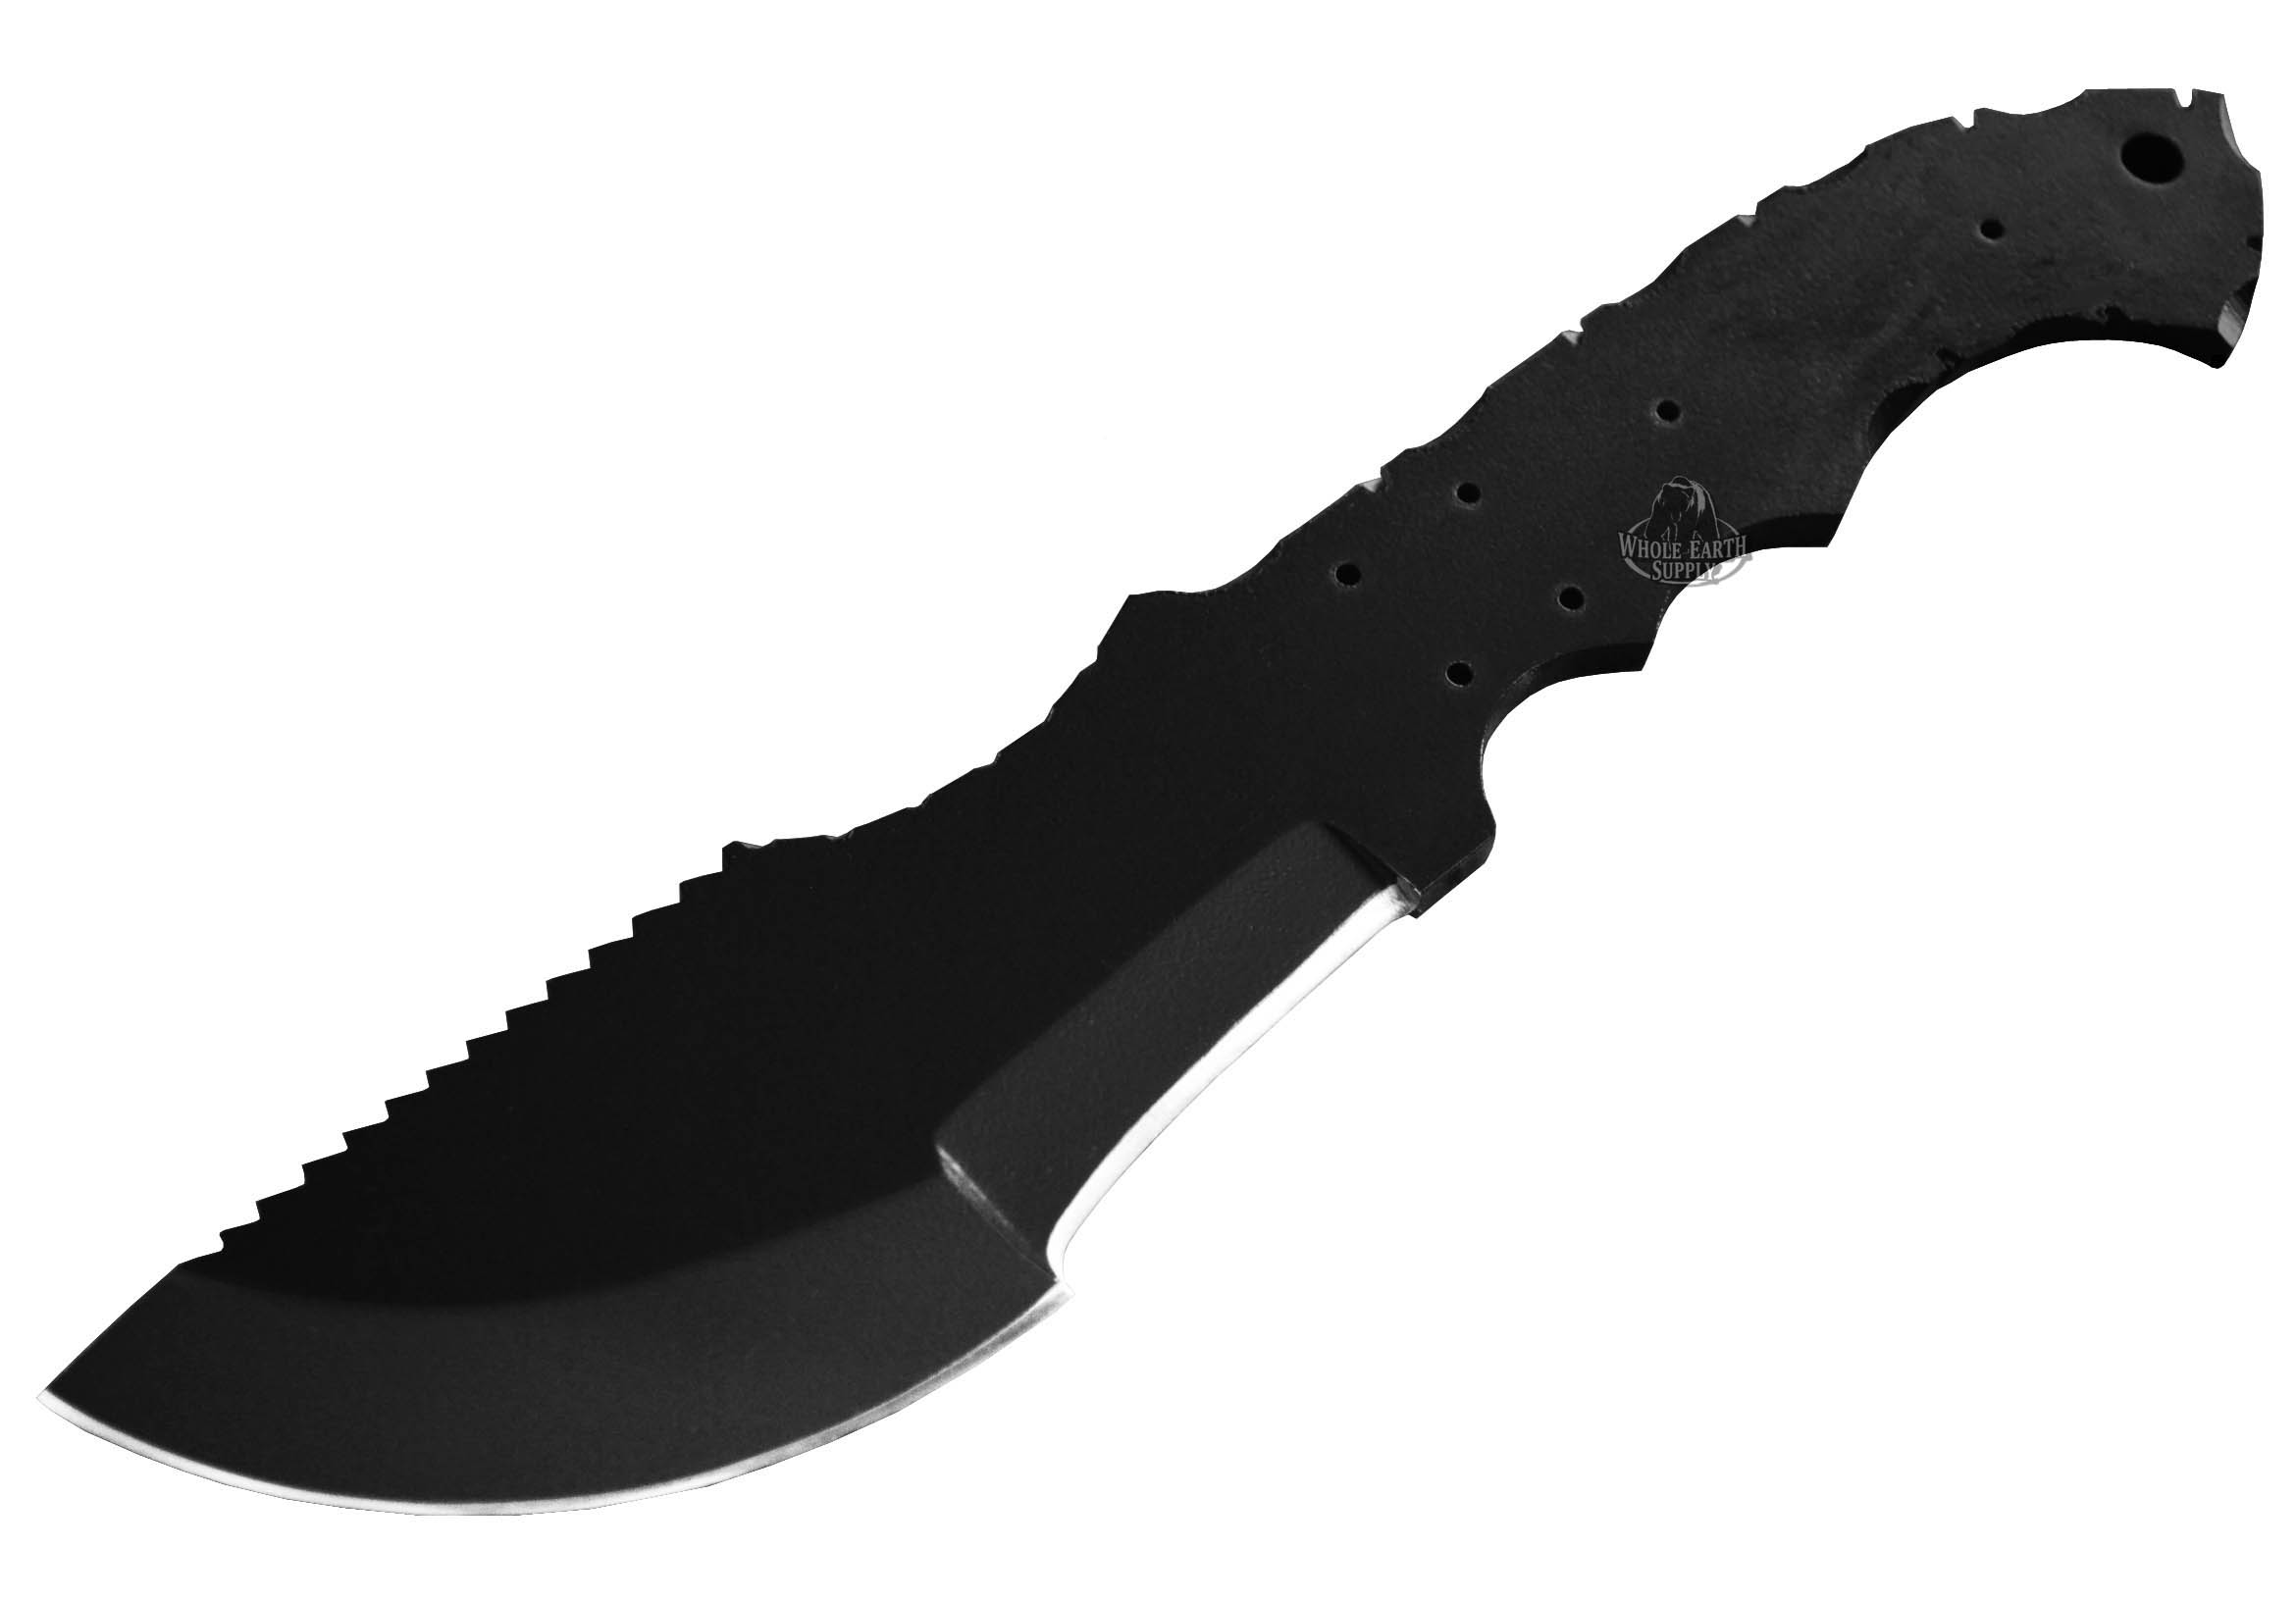 1095 High Carbon Steel Tracker Knife Blank Blade Hunting Skinning Skinner 1095HC Black Powder Coated